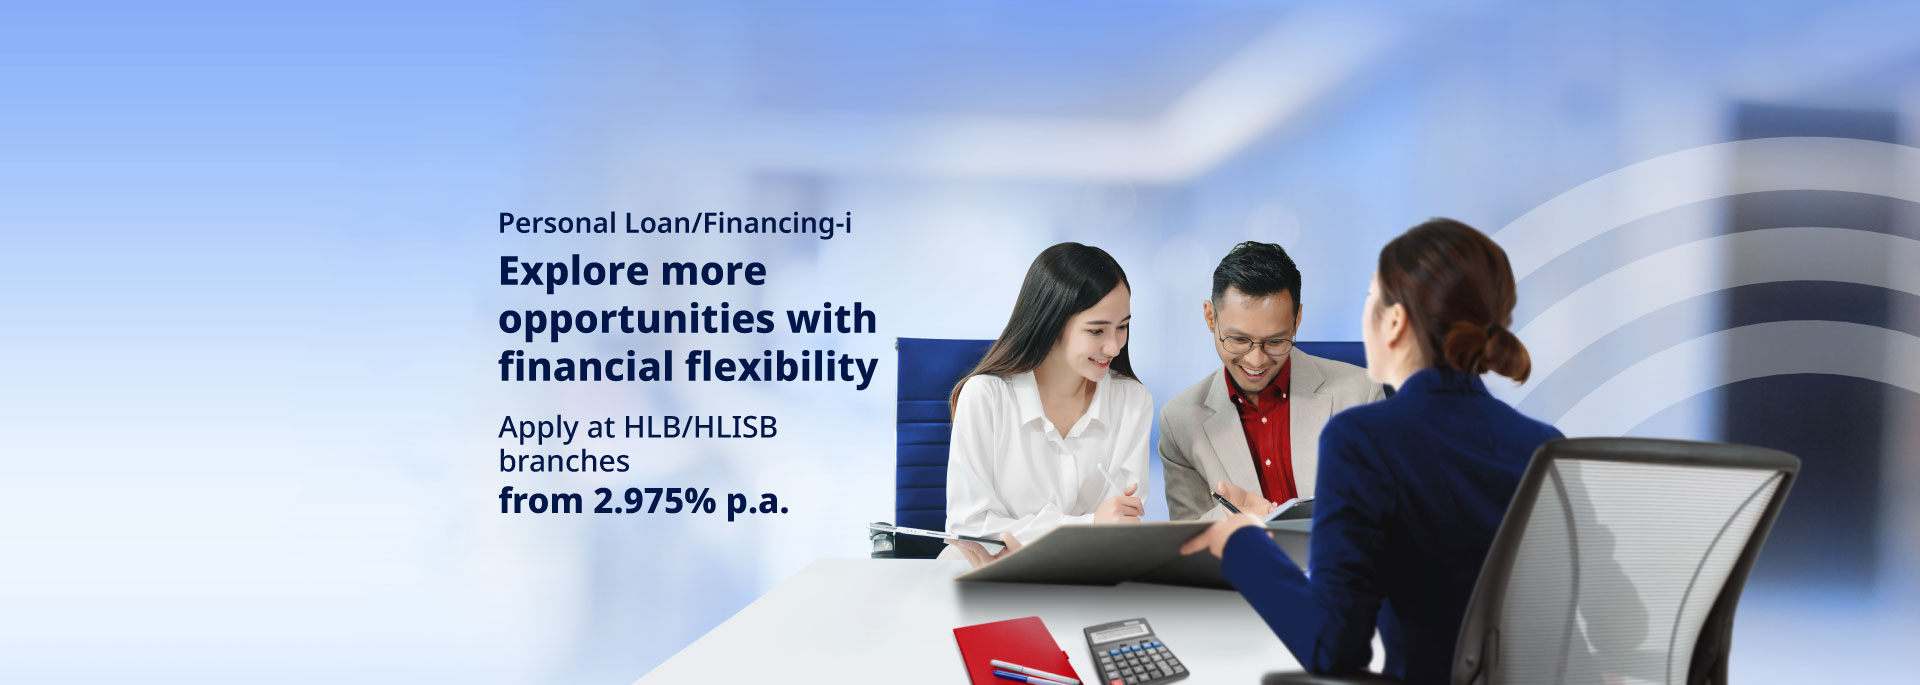 Personal Loan/Financing-i Online Offer